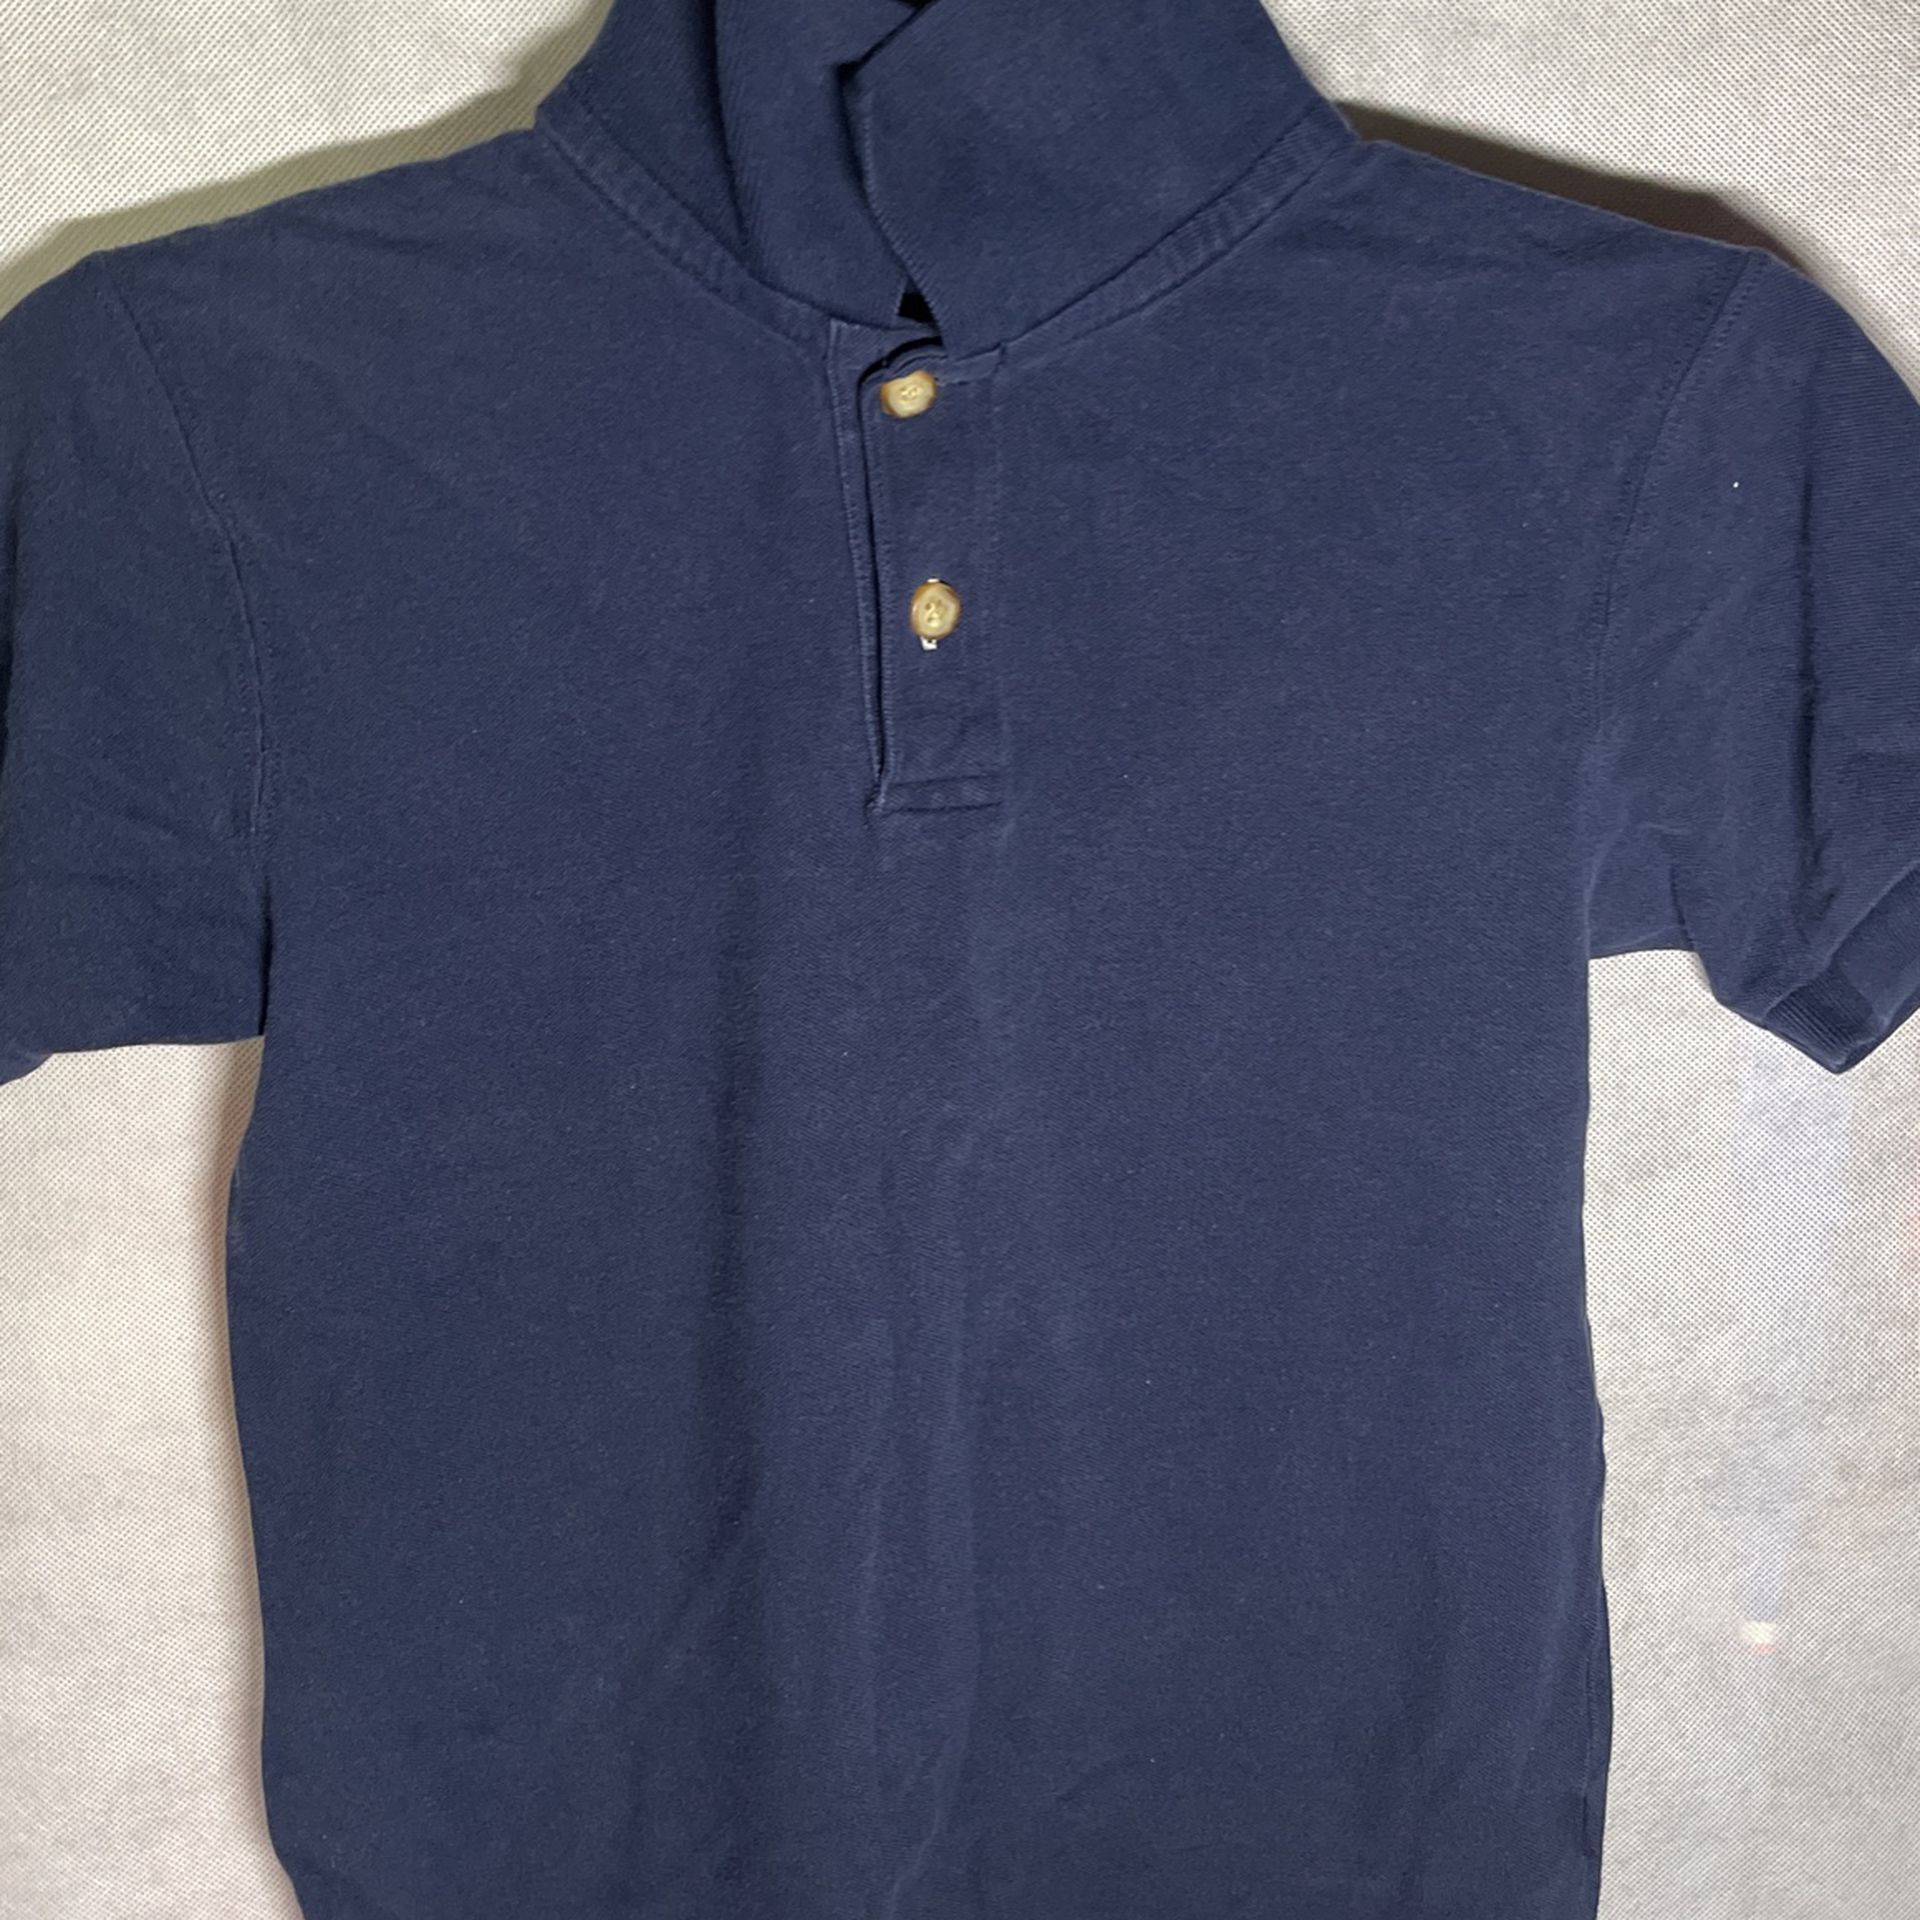 Boys  Collar Shirt Size 7/8 Medium (polo Shirt kind)